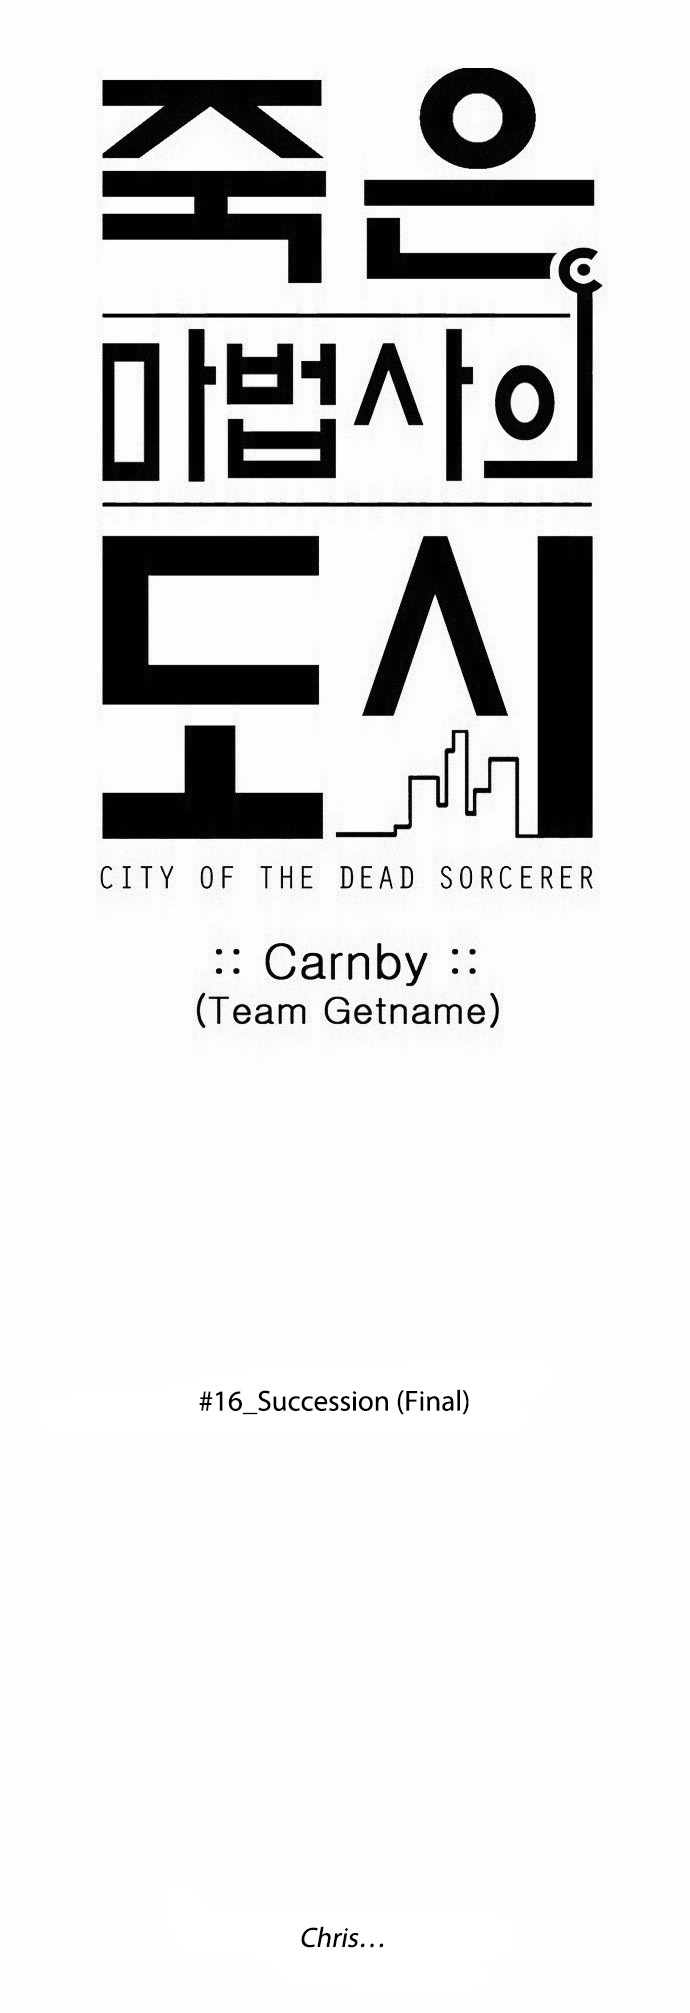 City Of Dead Sorcerer - Page 2